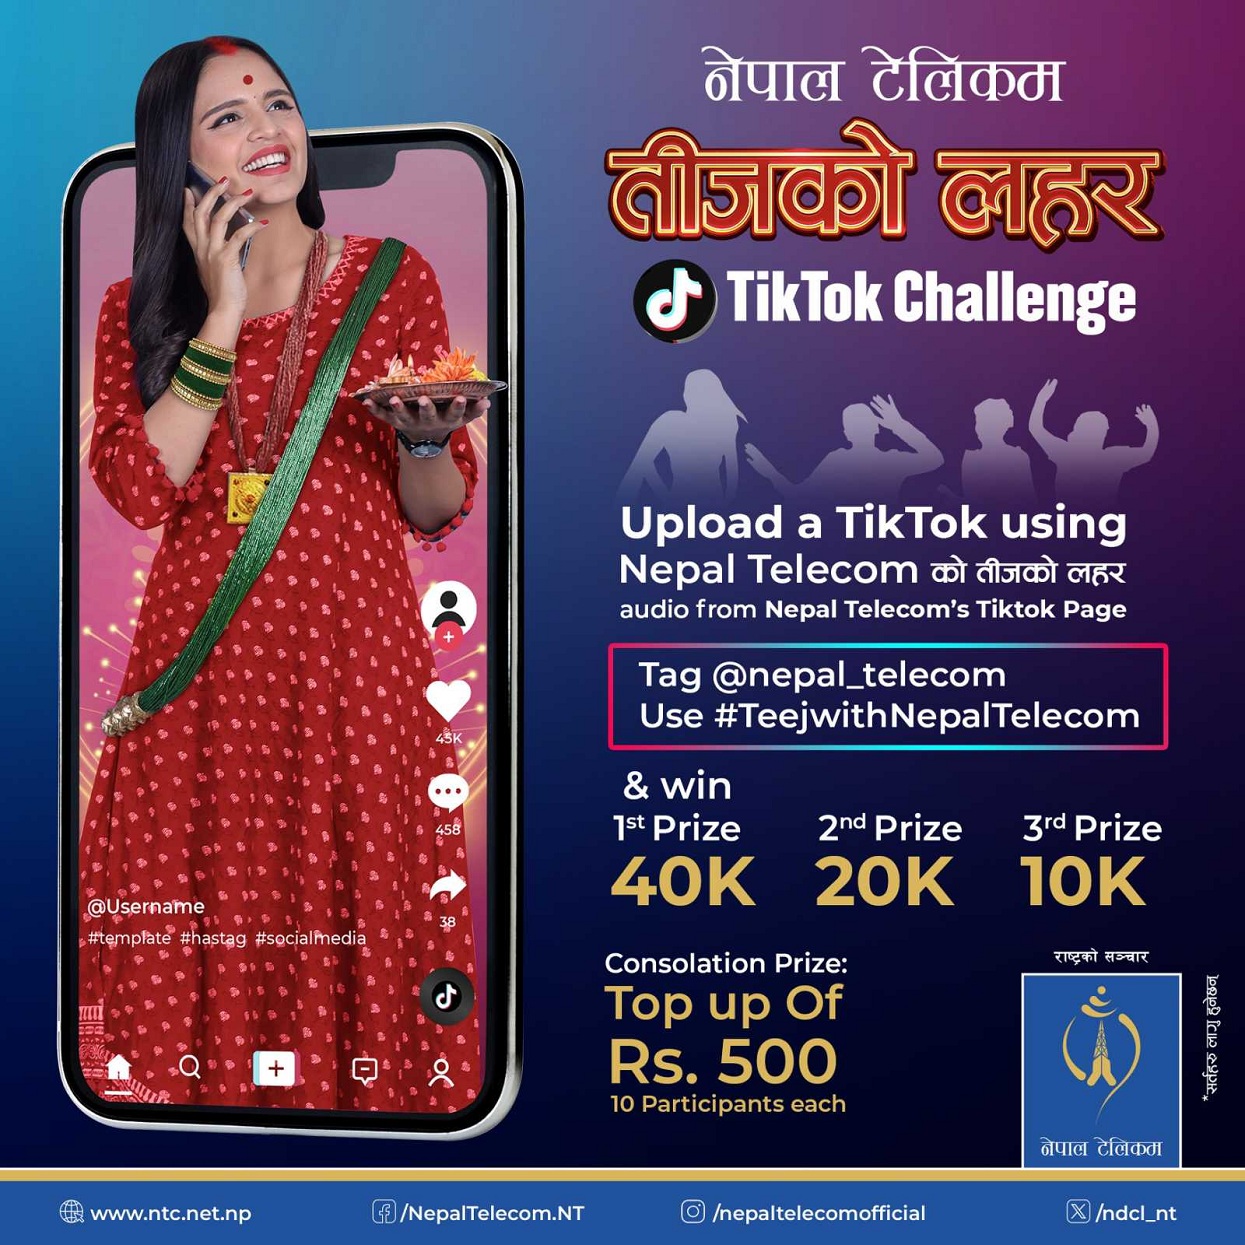 Nepal Telecom brings ‘TikTok Challenge’ for on the occasion of Teej